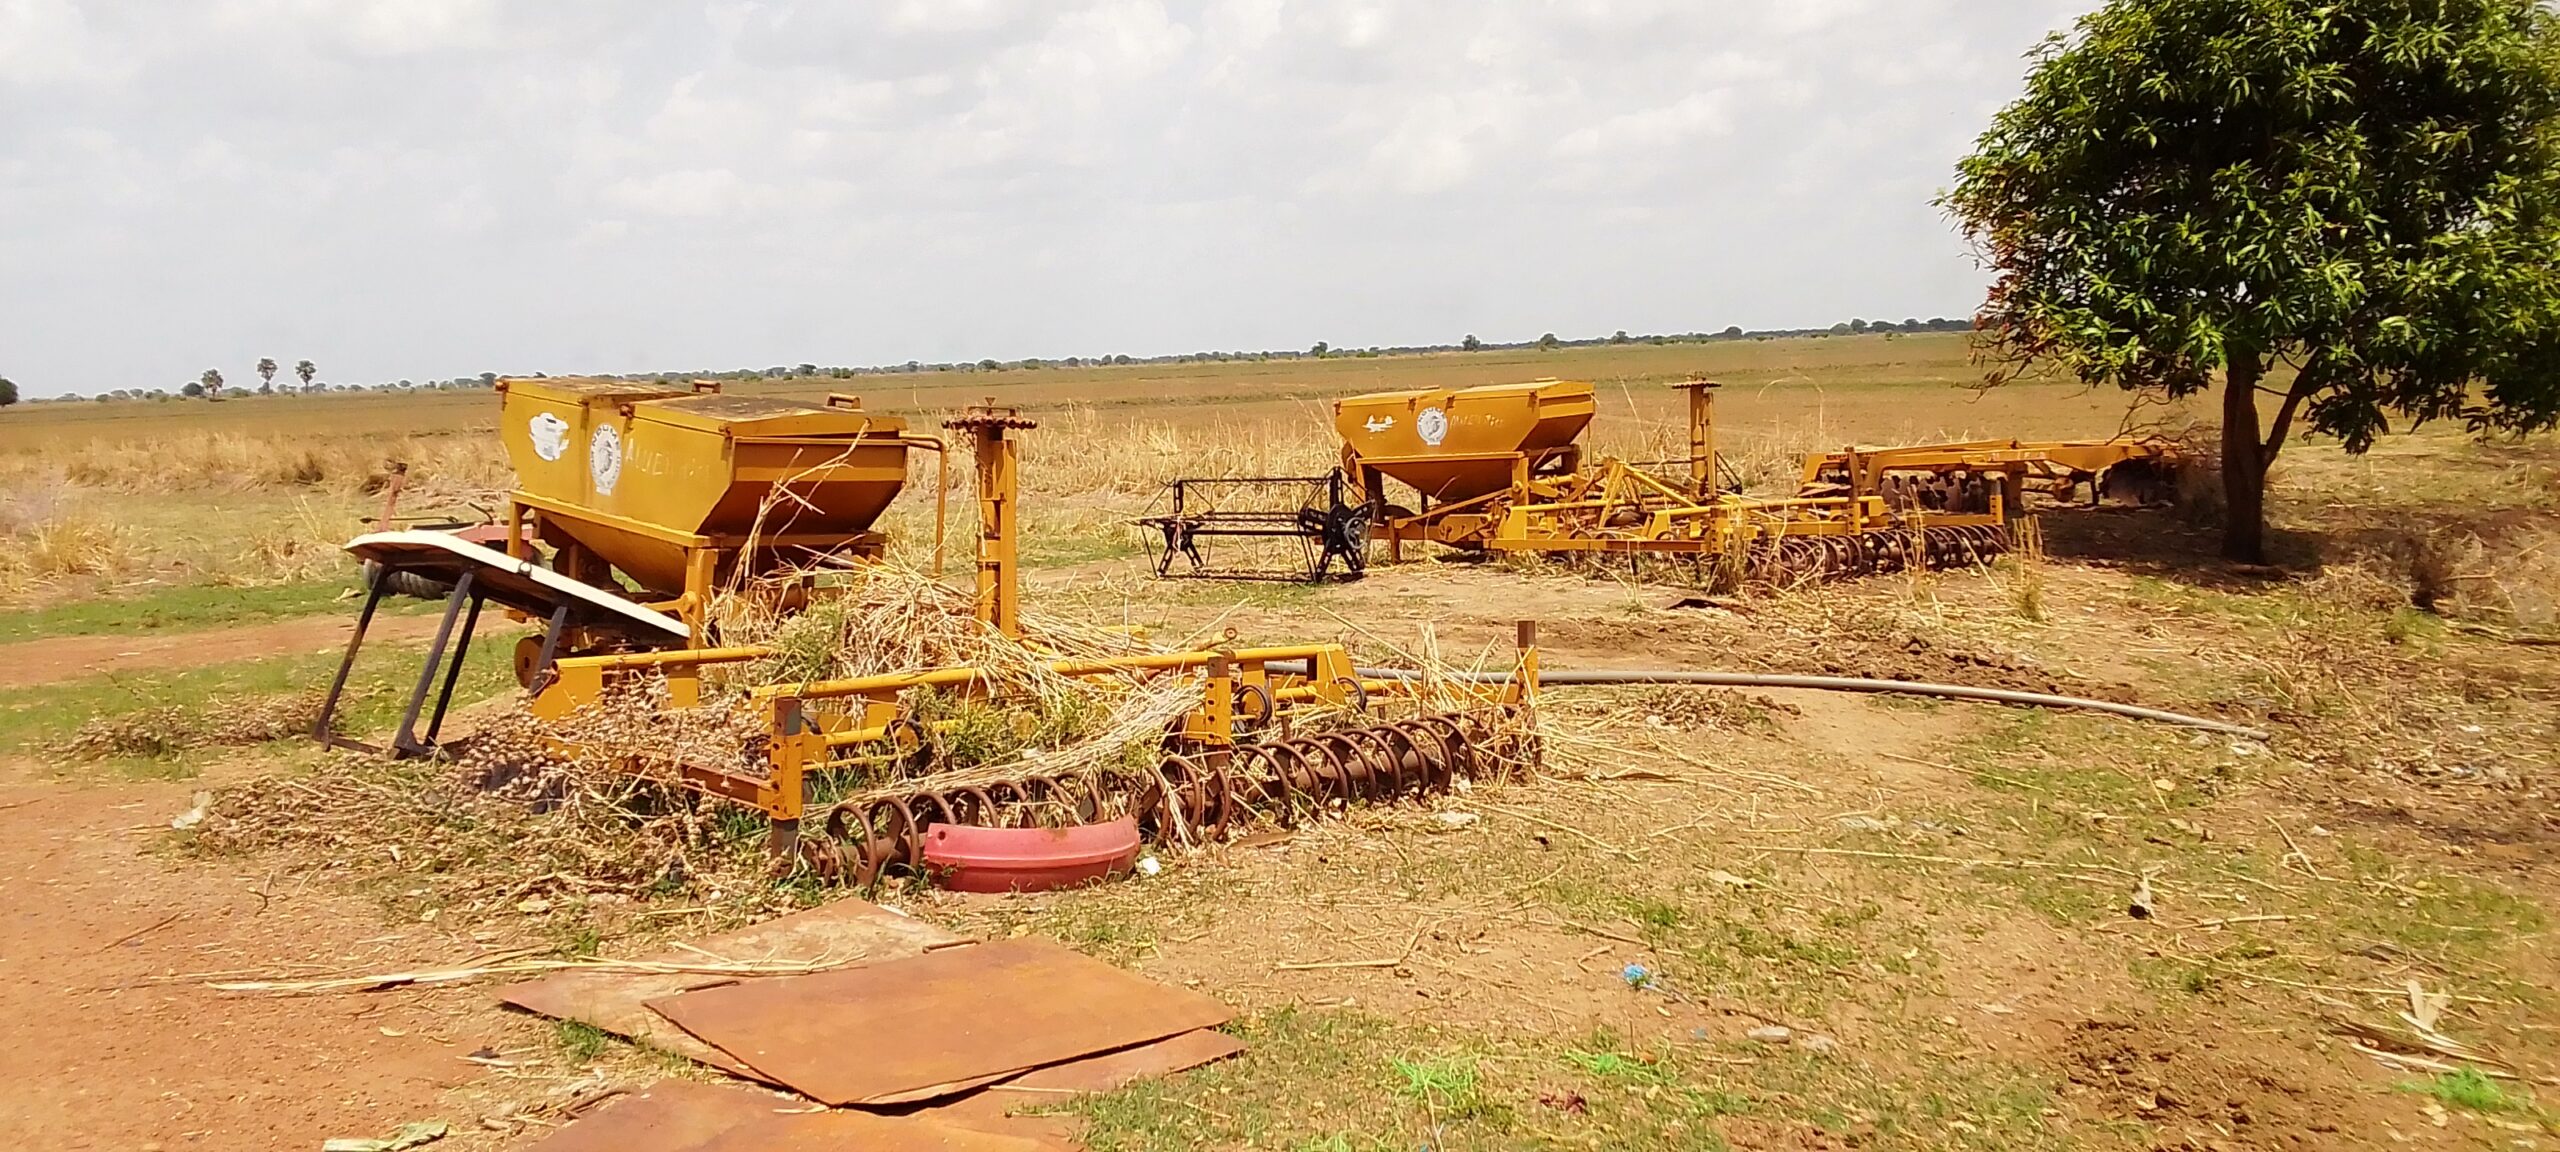 NBGs decries lack of farming tools, machinery